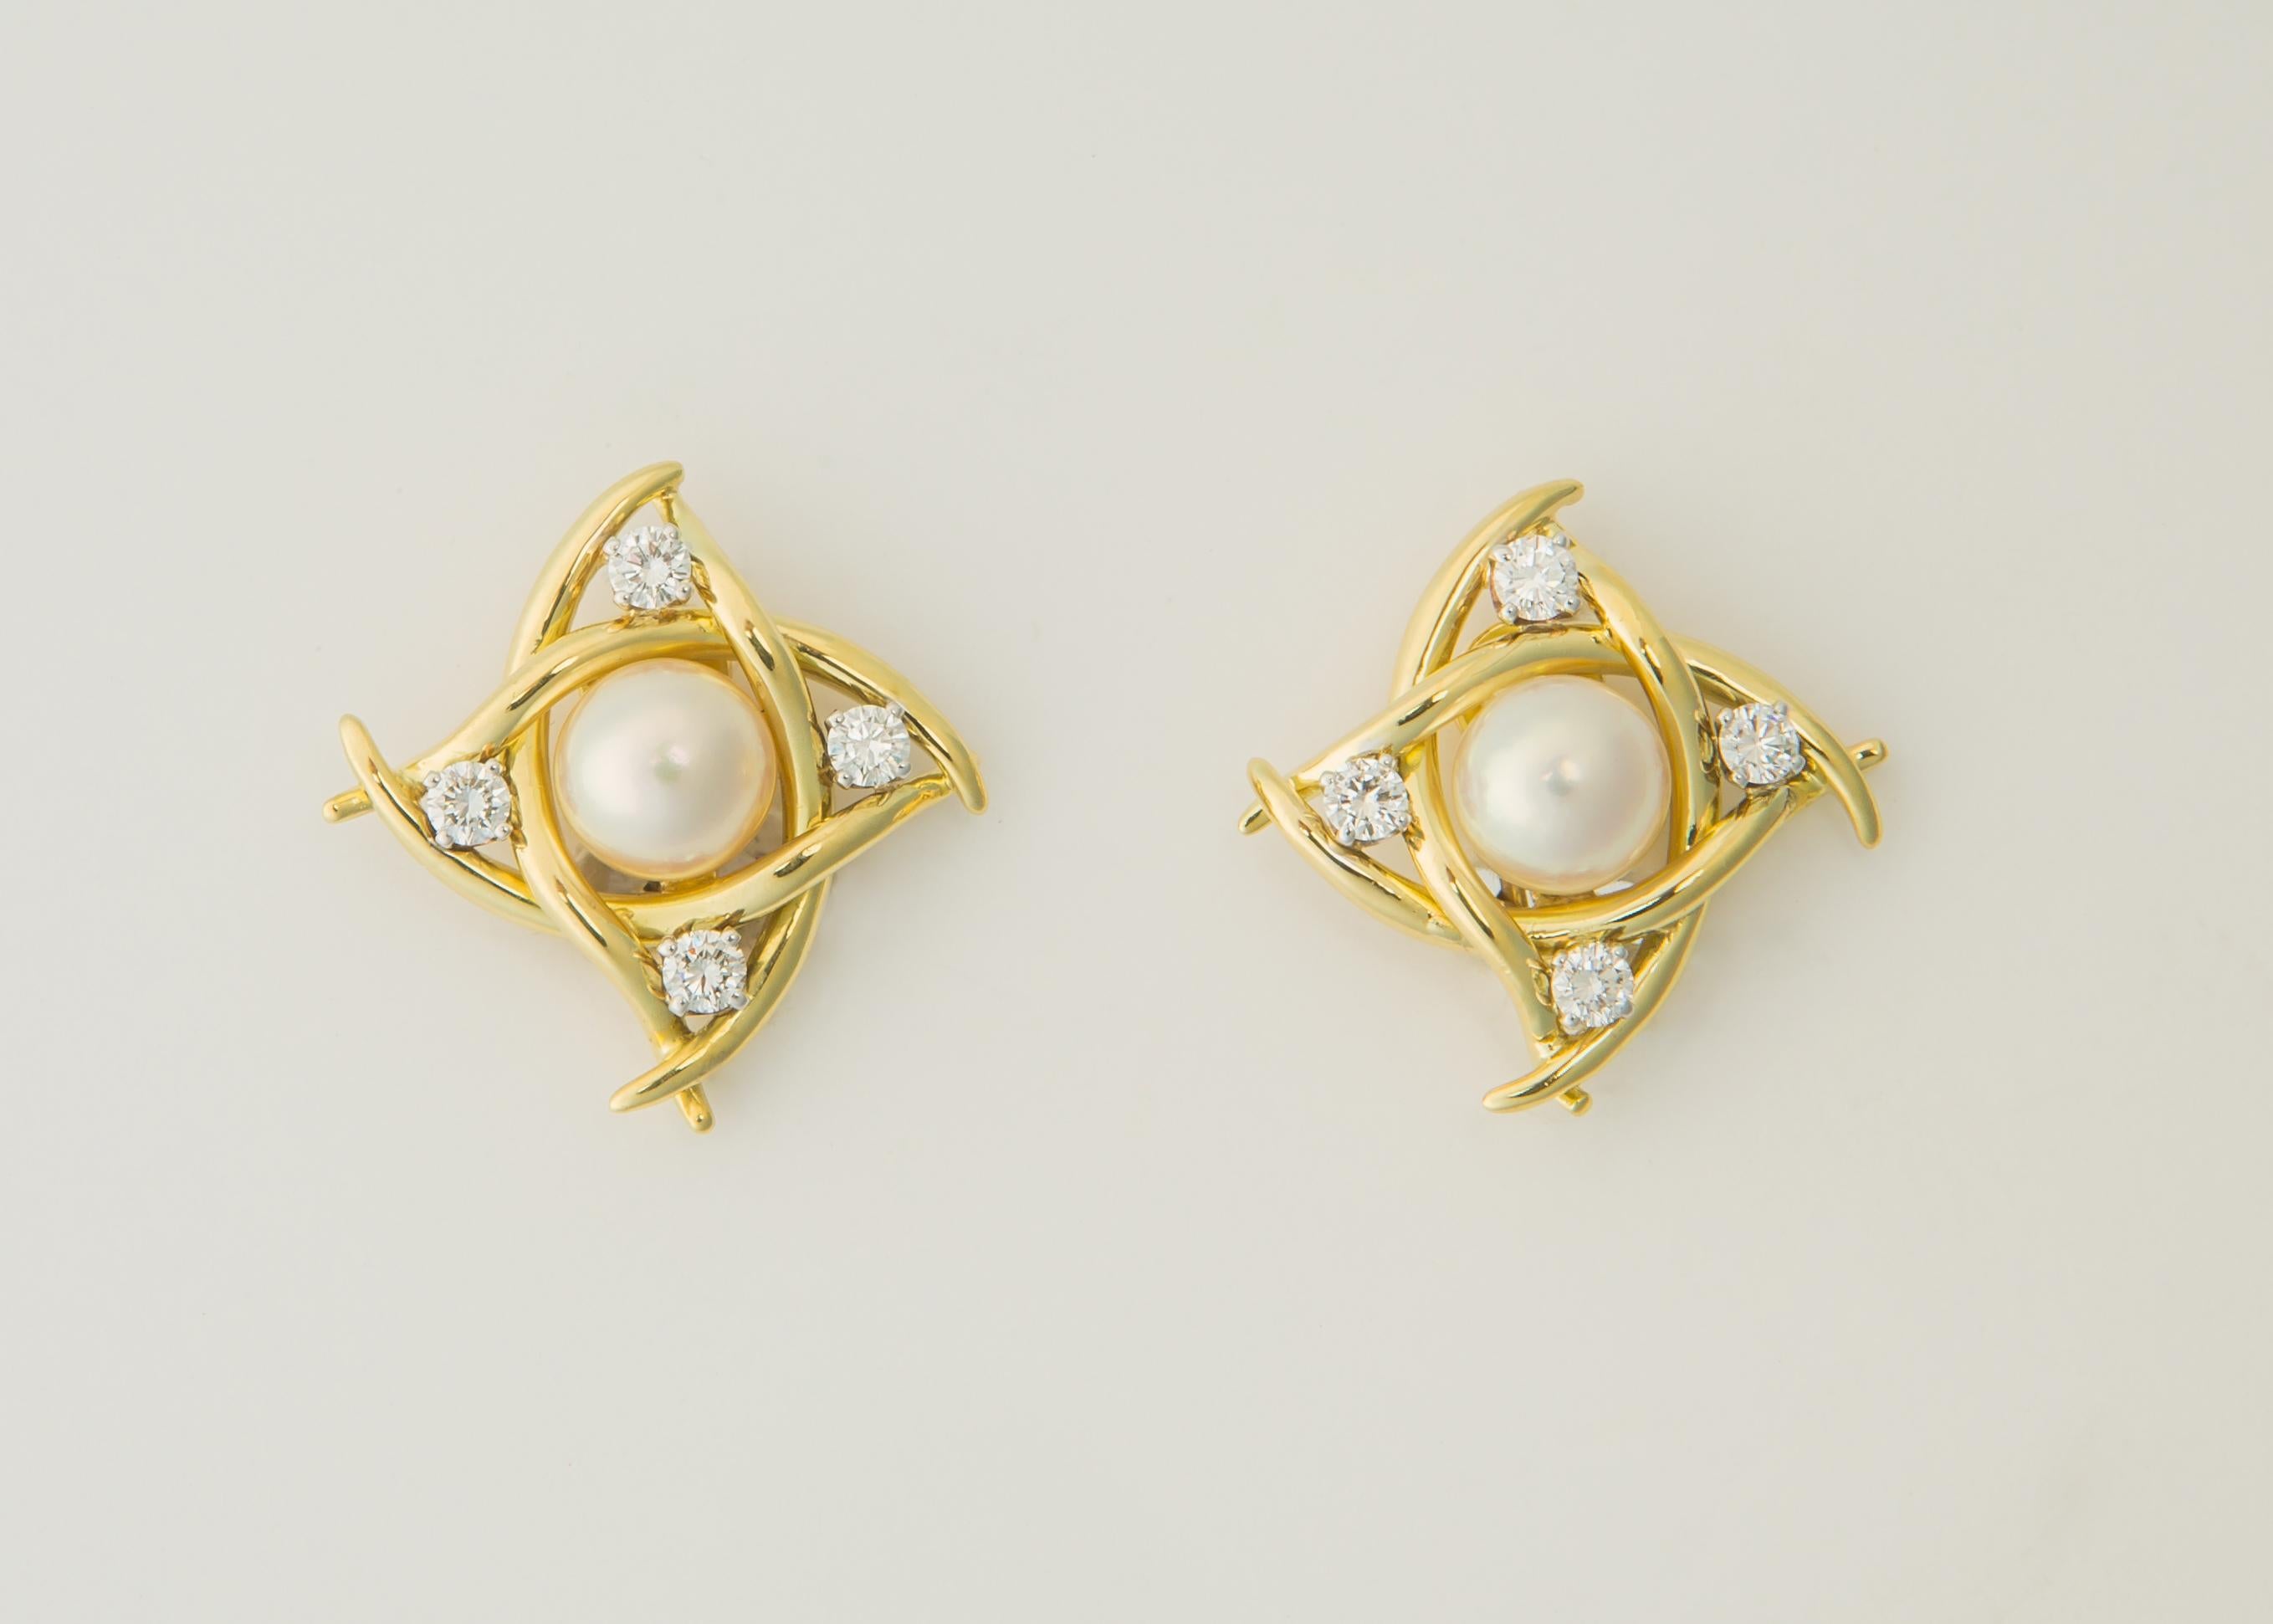 pearl diamond earrings tiffany